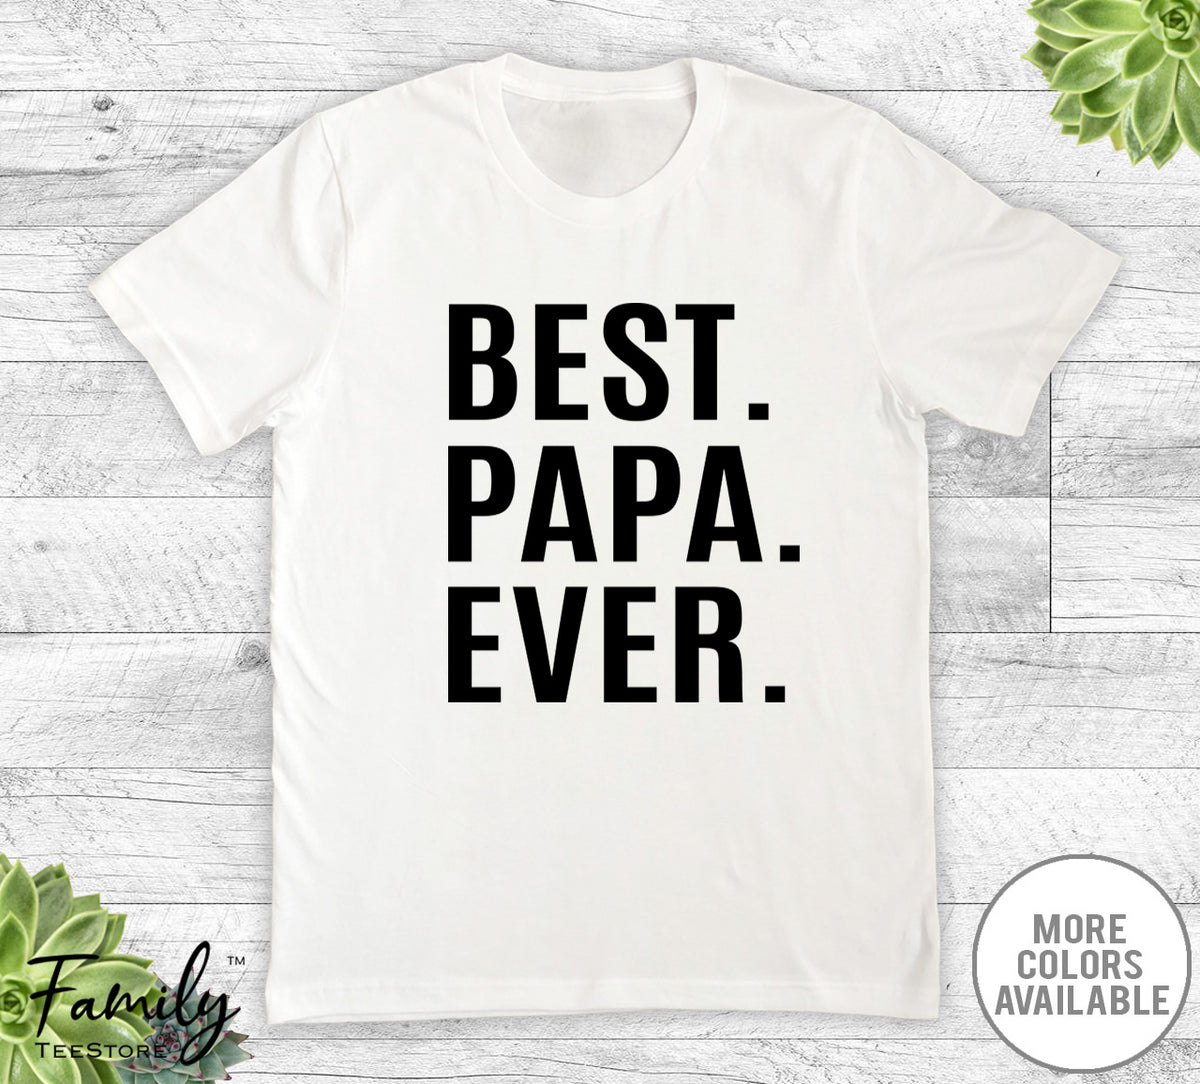 Best Papa Ever - Unisex T-shirt - Papa Shirt - Papa Gift - familyteeprints